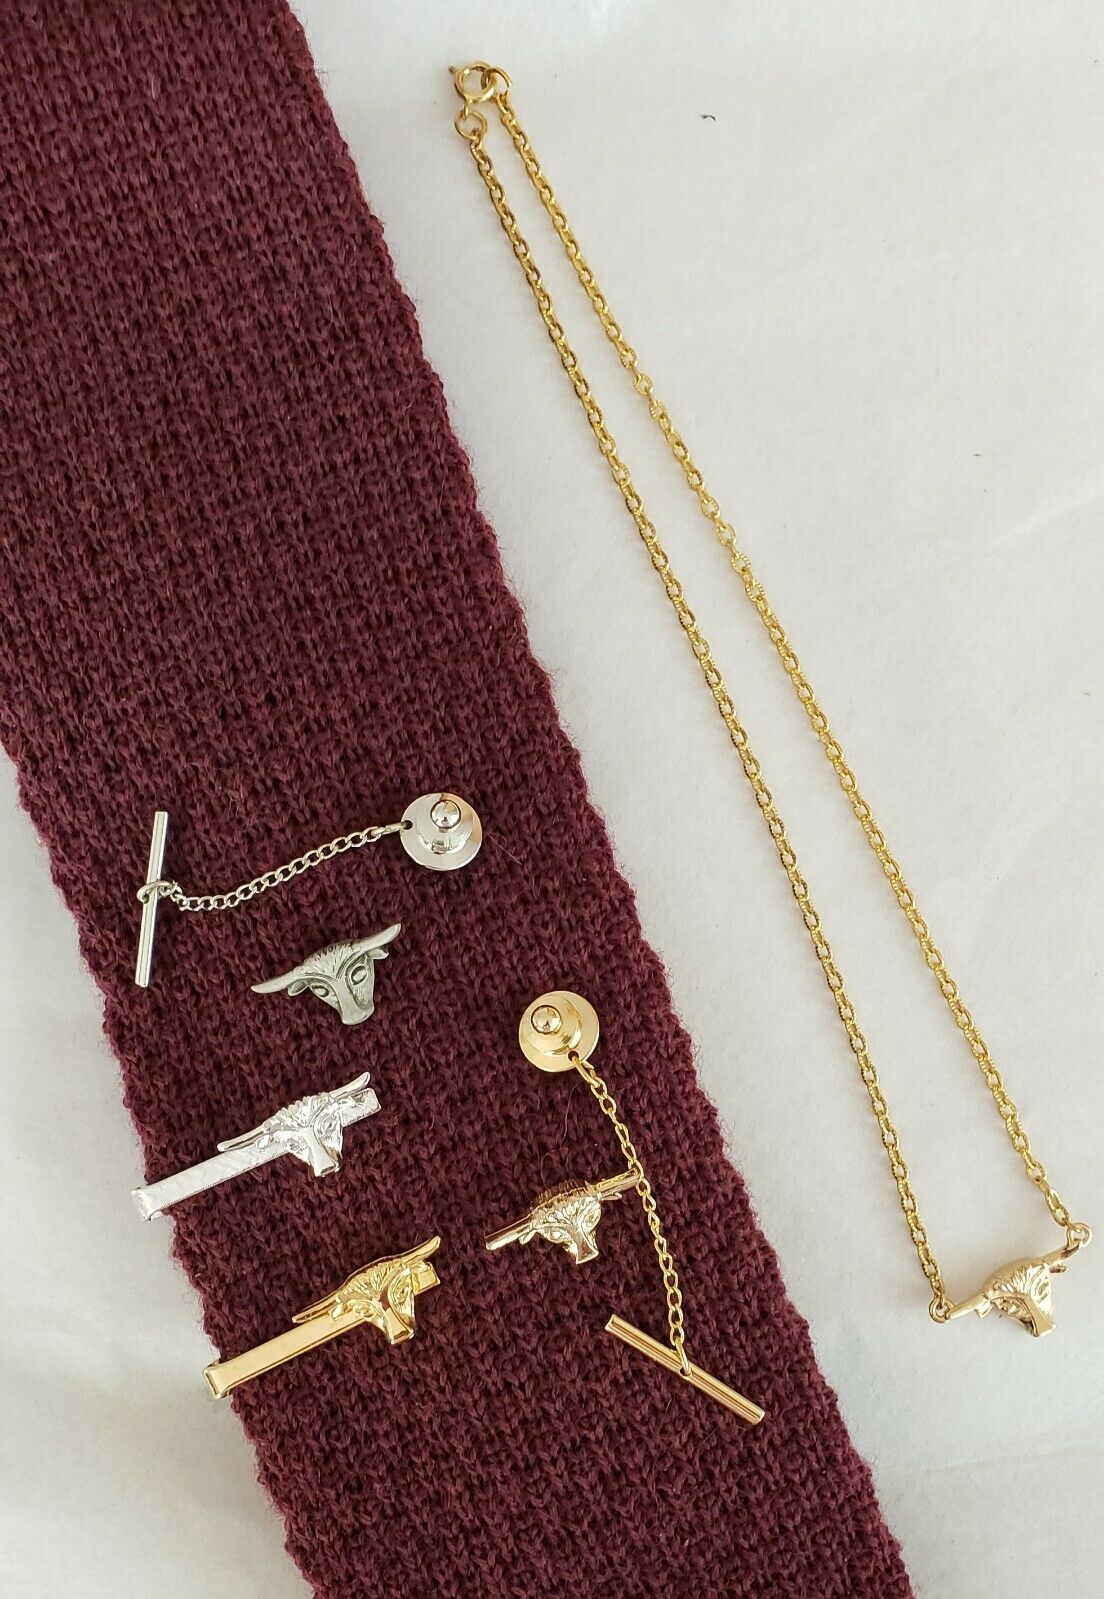 Vintage Steerhead Jewelry lot of 5 pcs: 2 Tie Tacks, 1 pendant, 2 tie clips